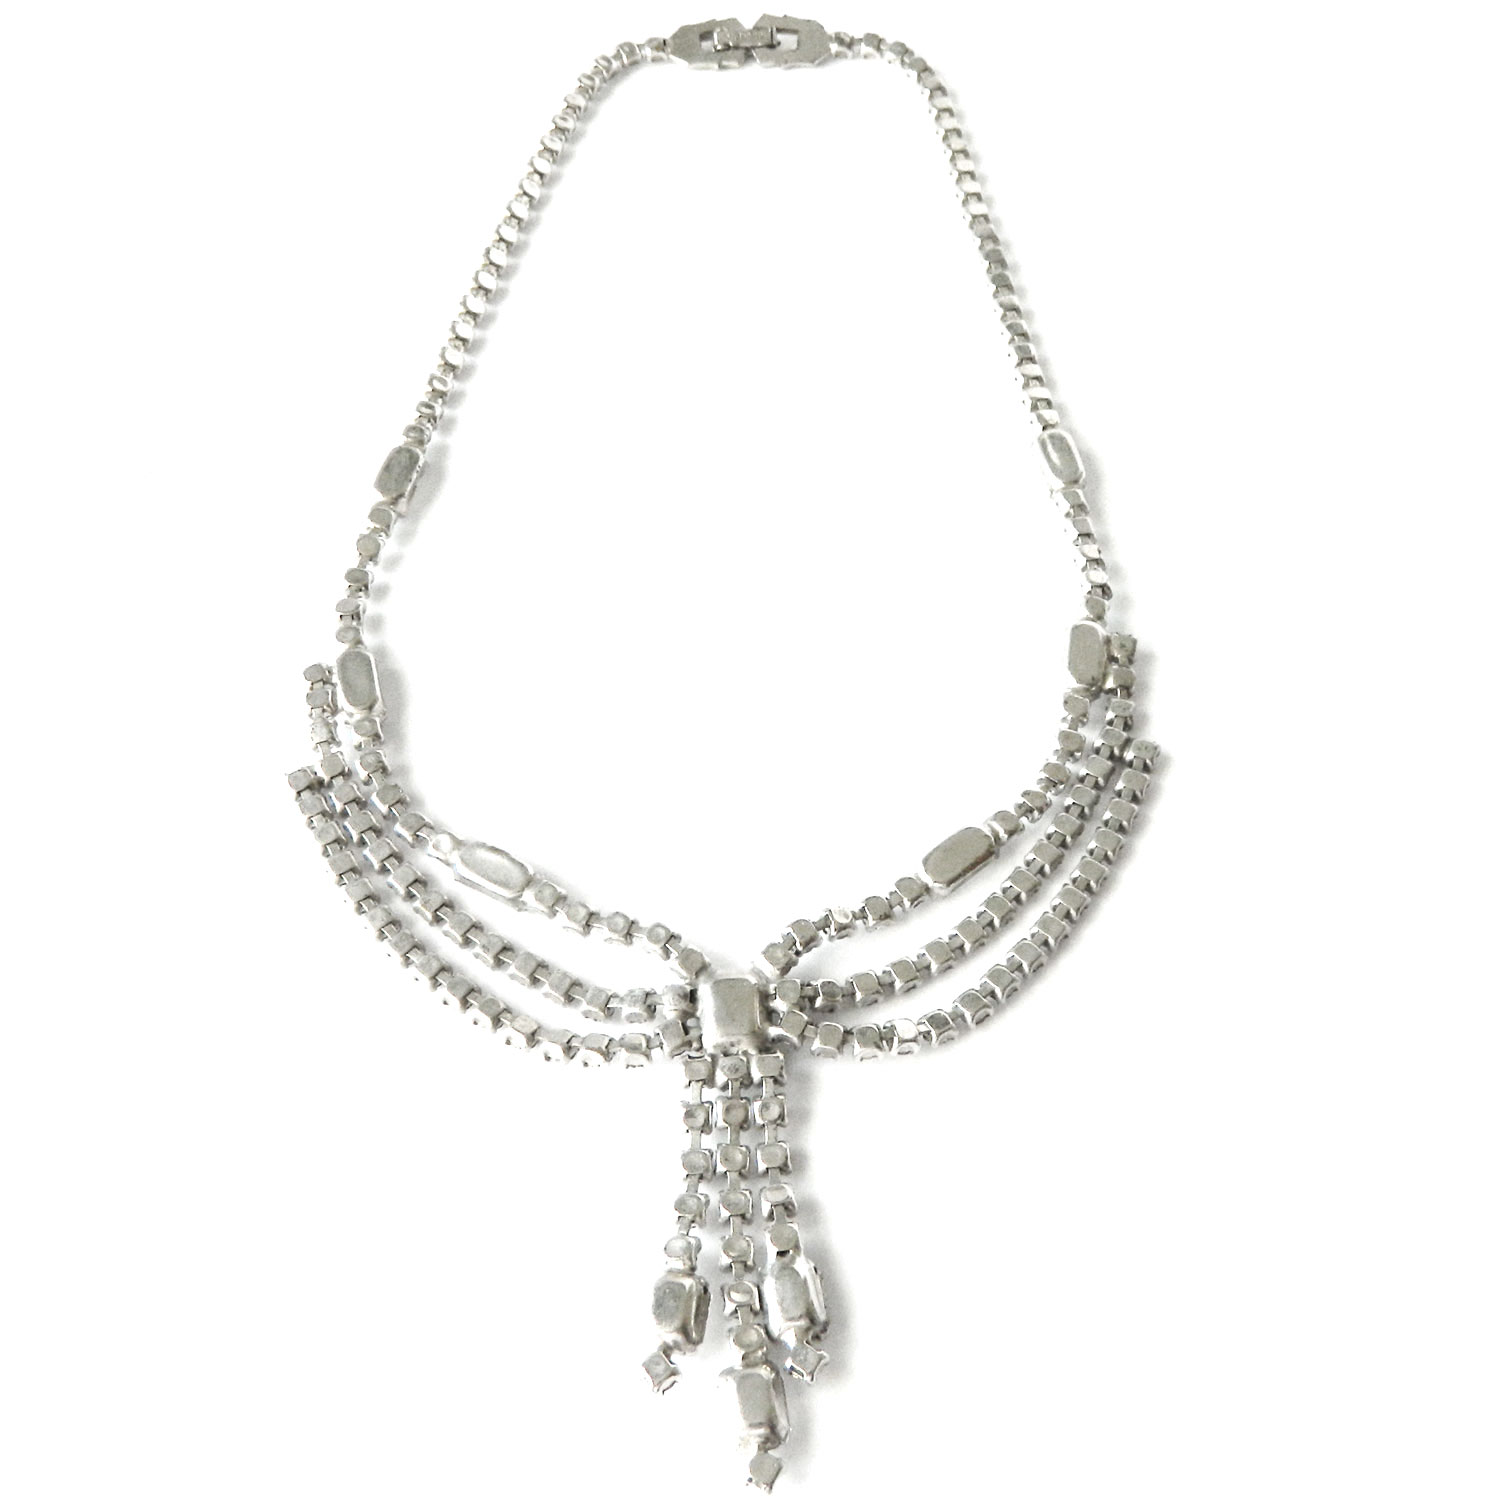 1950's Kramer rhinestone necklace